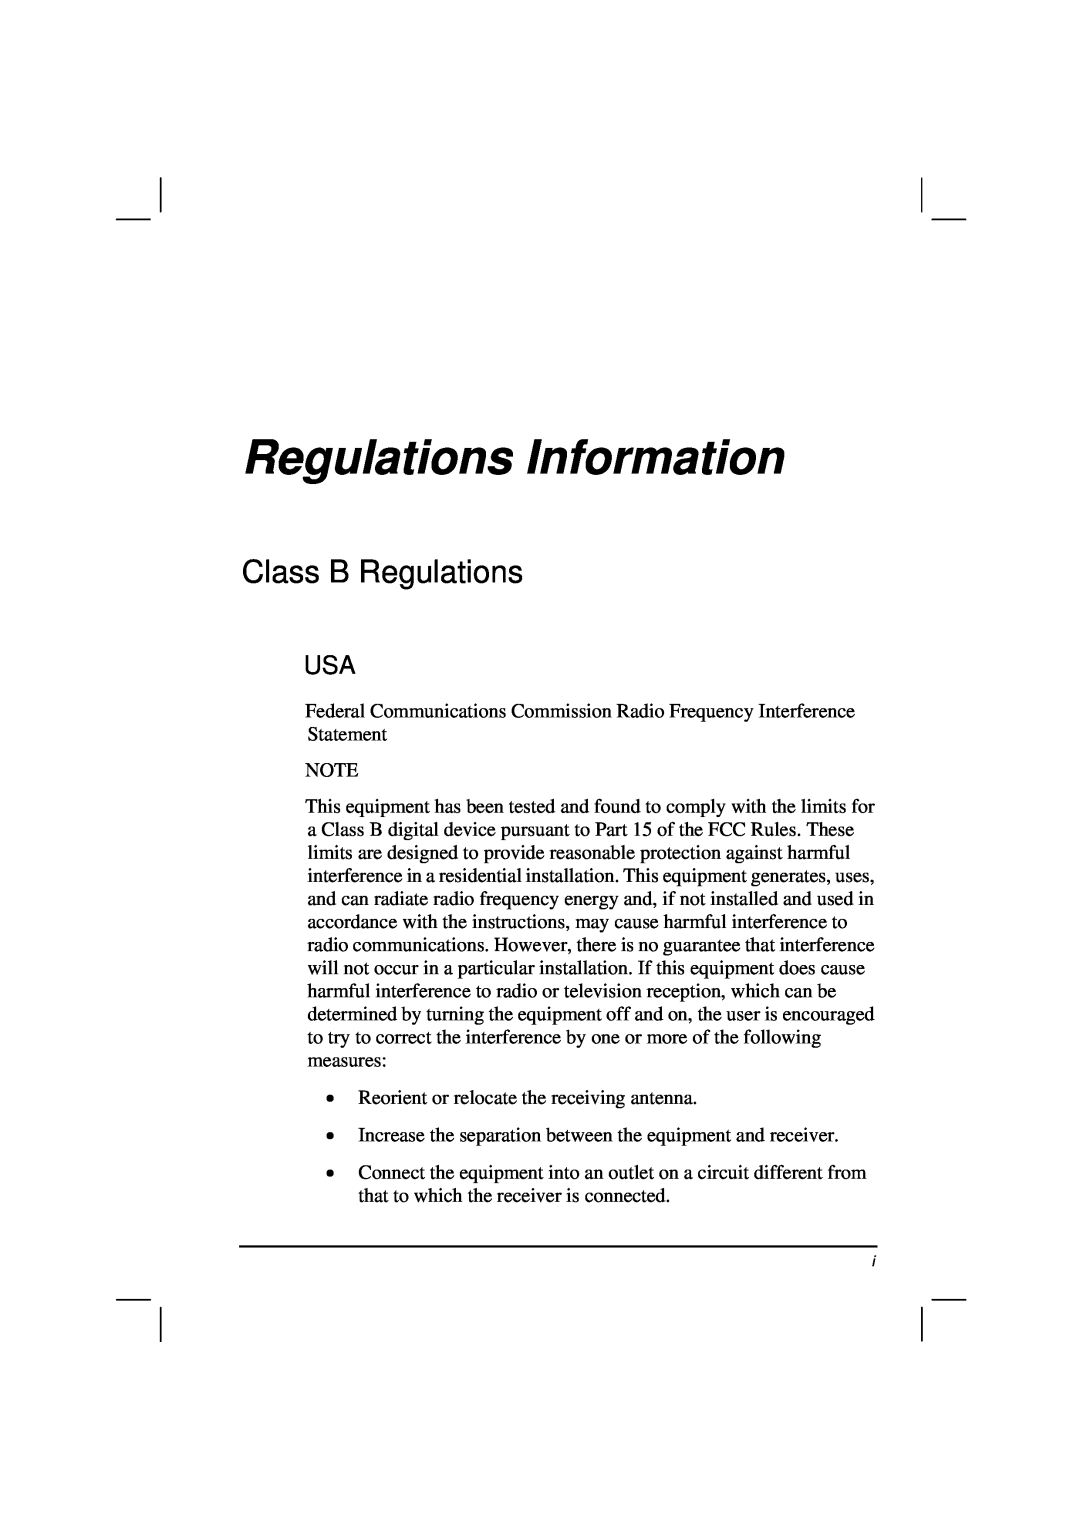 Casio HK1223 owner manual Regulations Information, Class B Regulations 